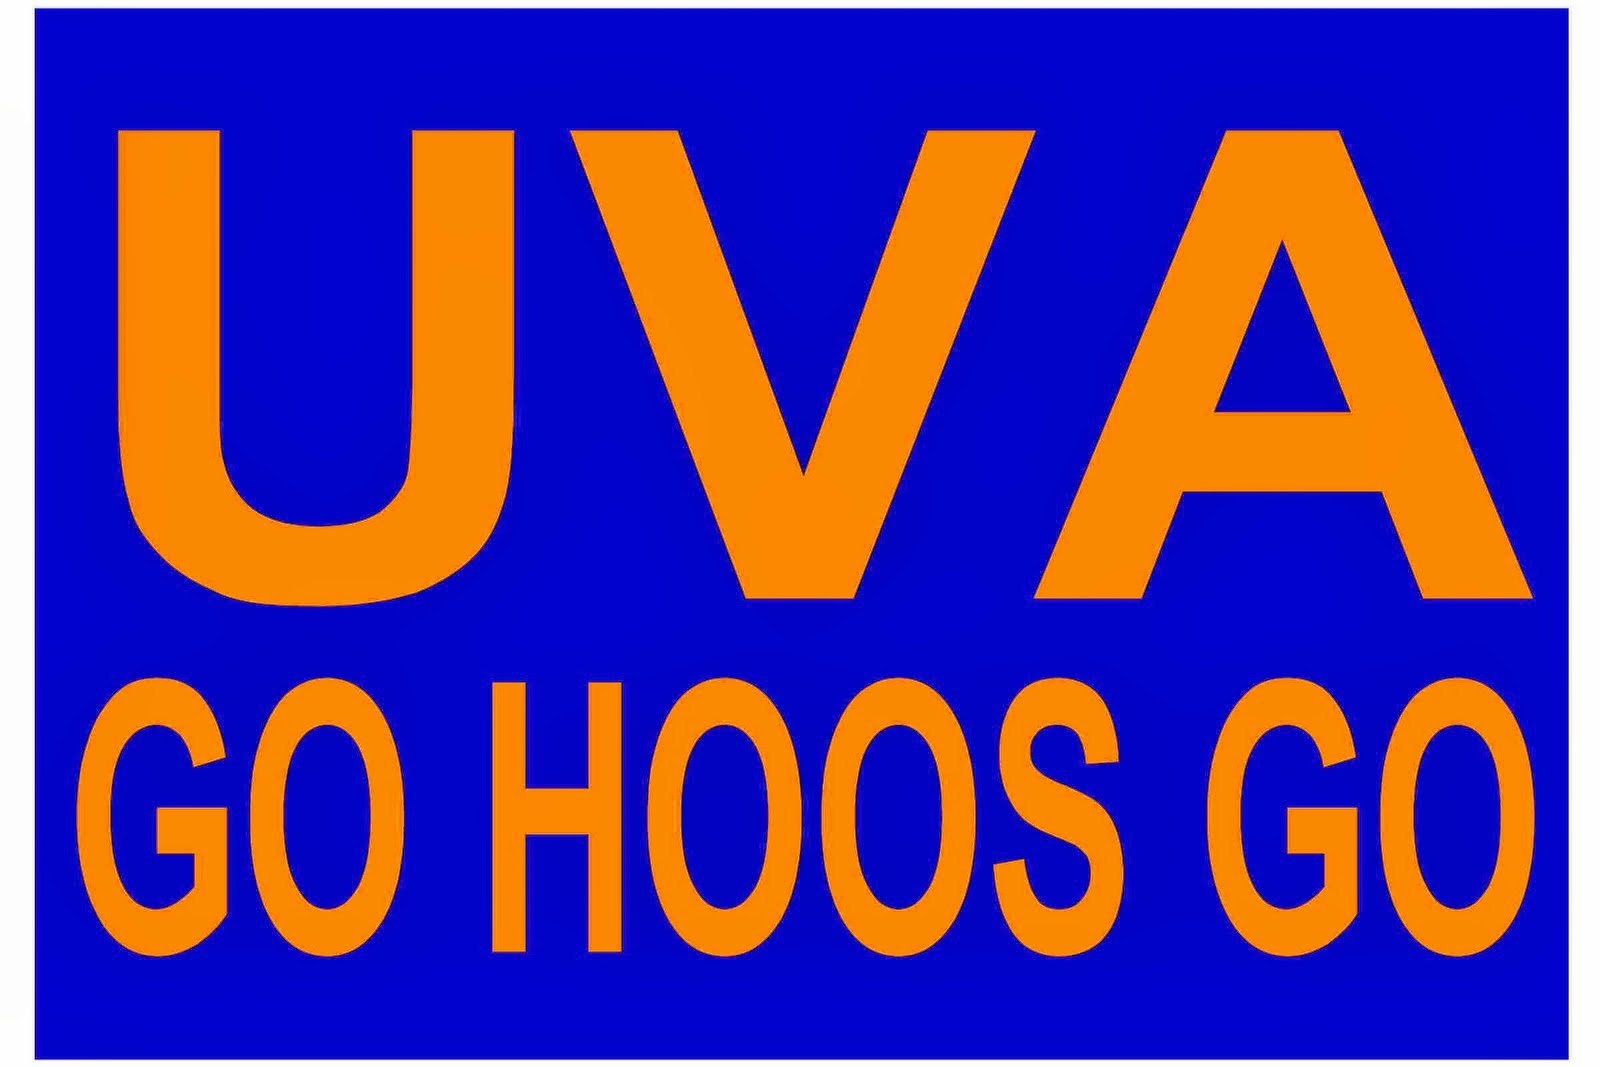 UVA+Go+Hoos+Go.JPG